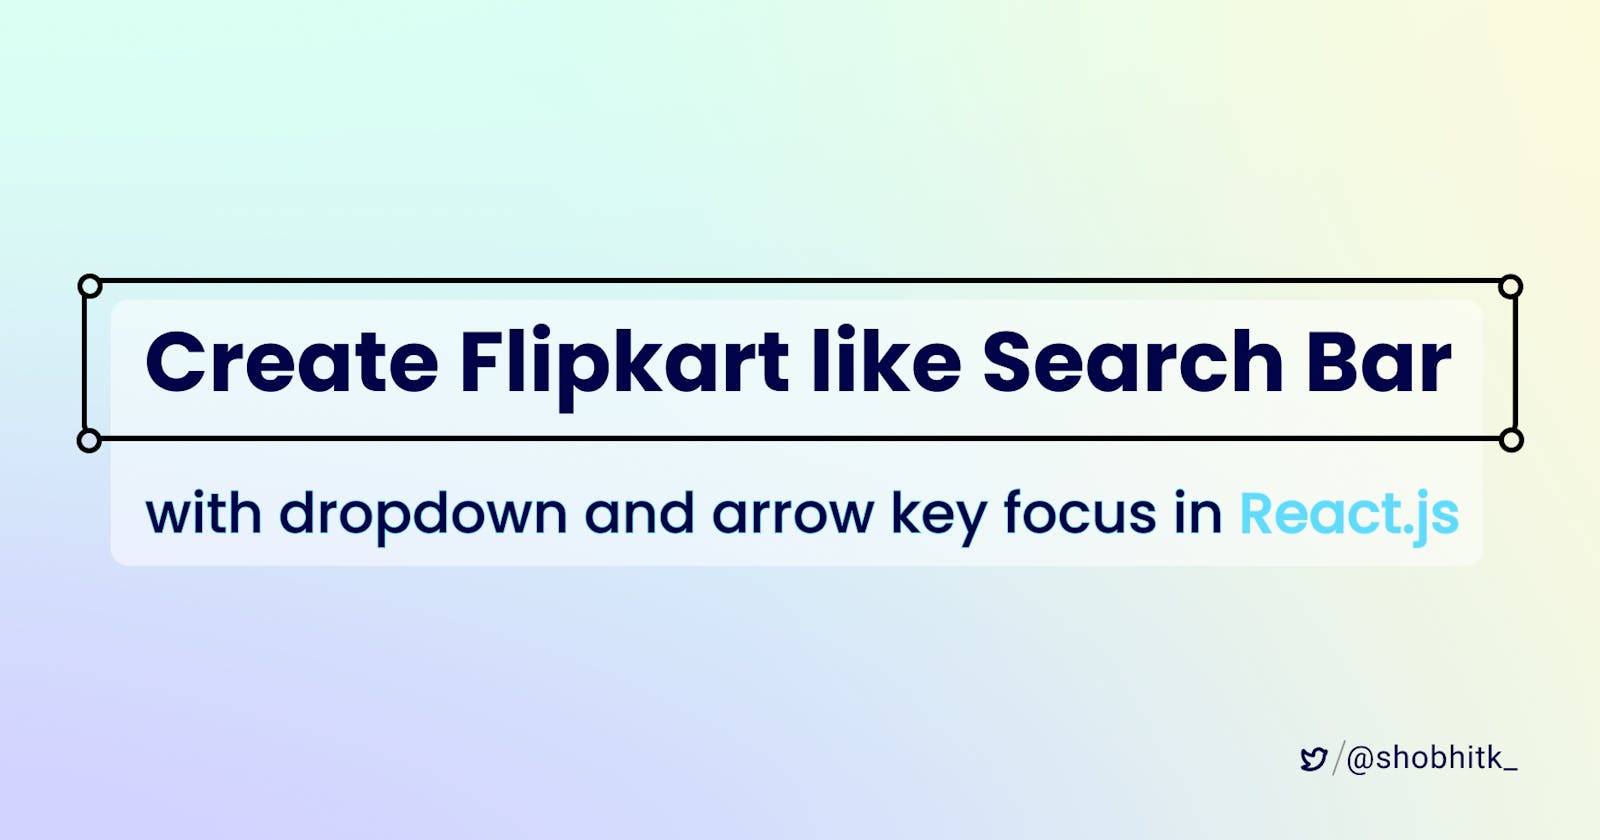 How to create Flipkart like Search Bar in React